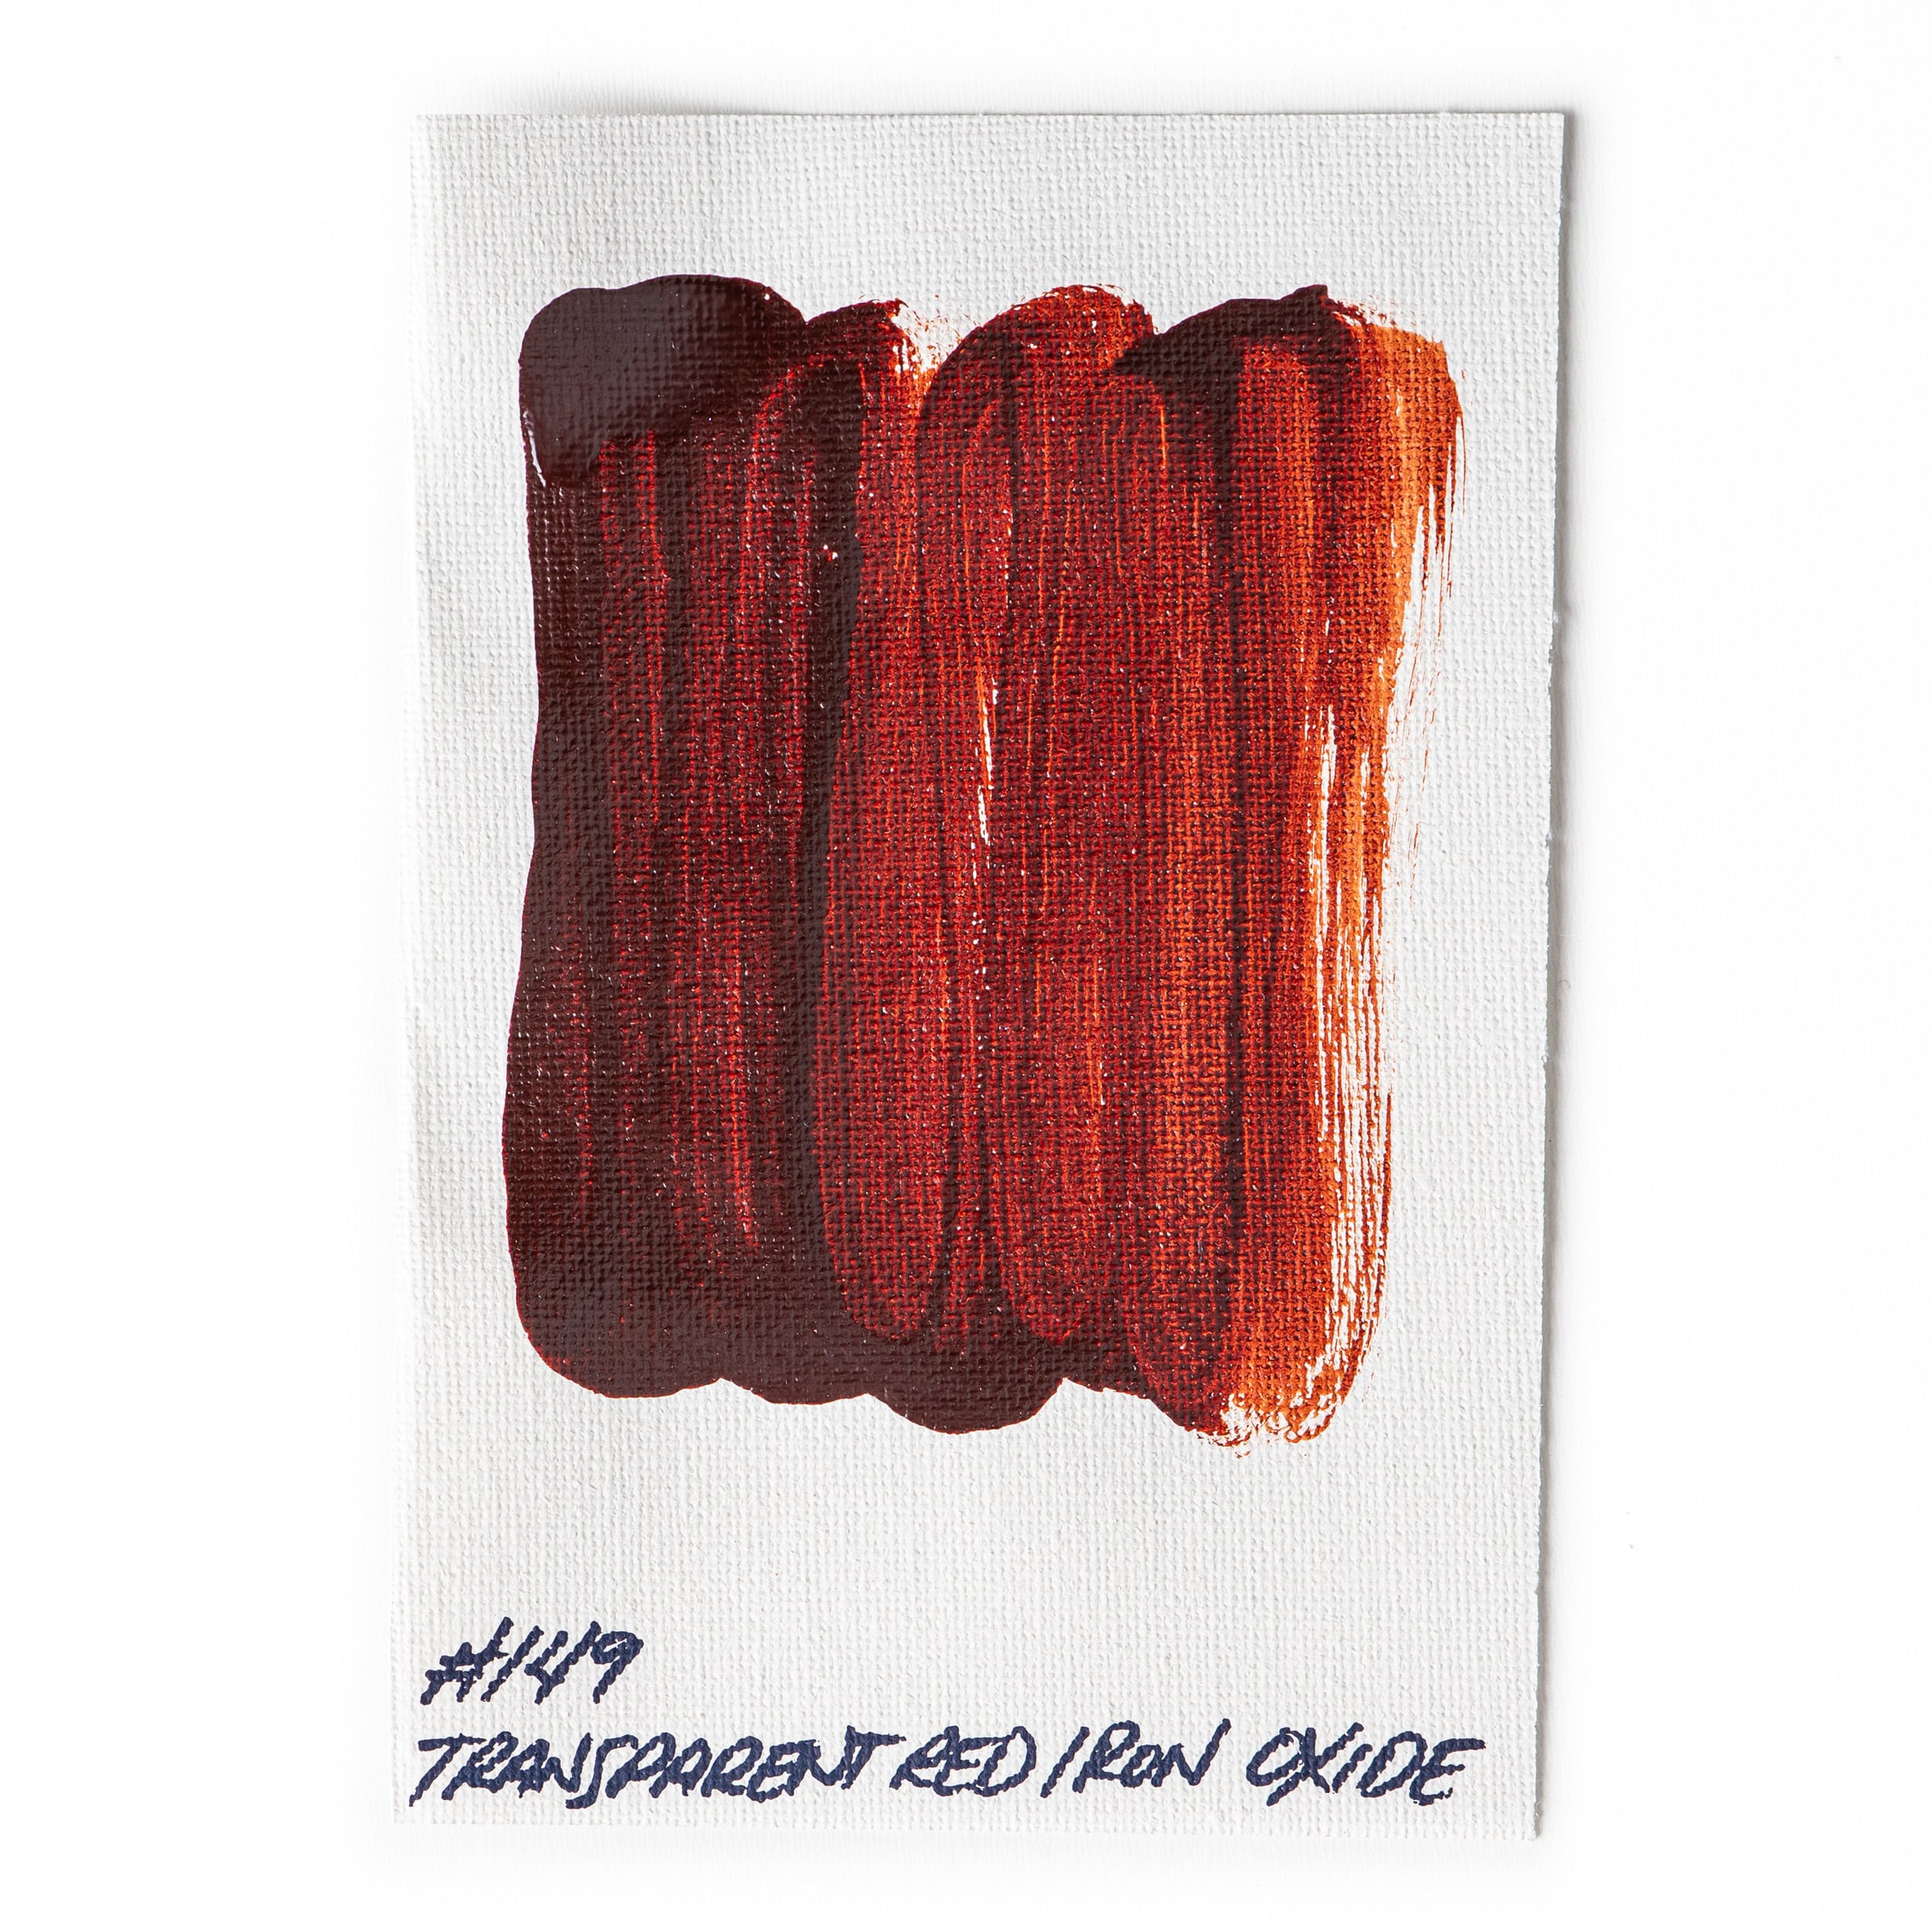 Buy #149 Transparent Red Iron Oxide - Lightfastness